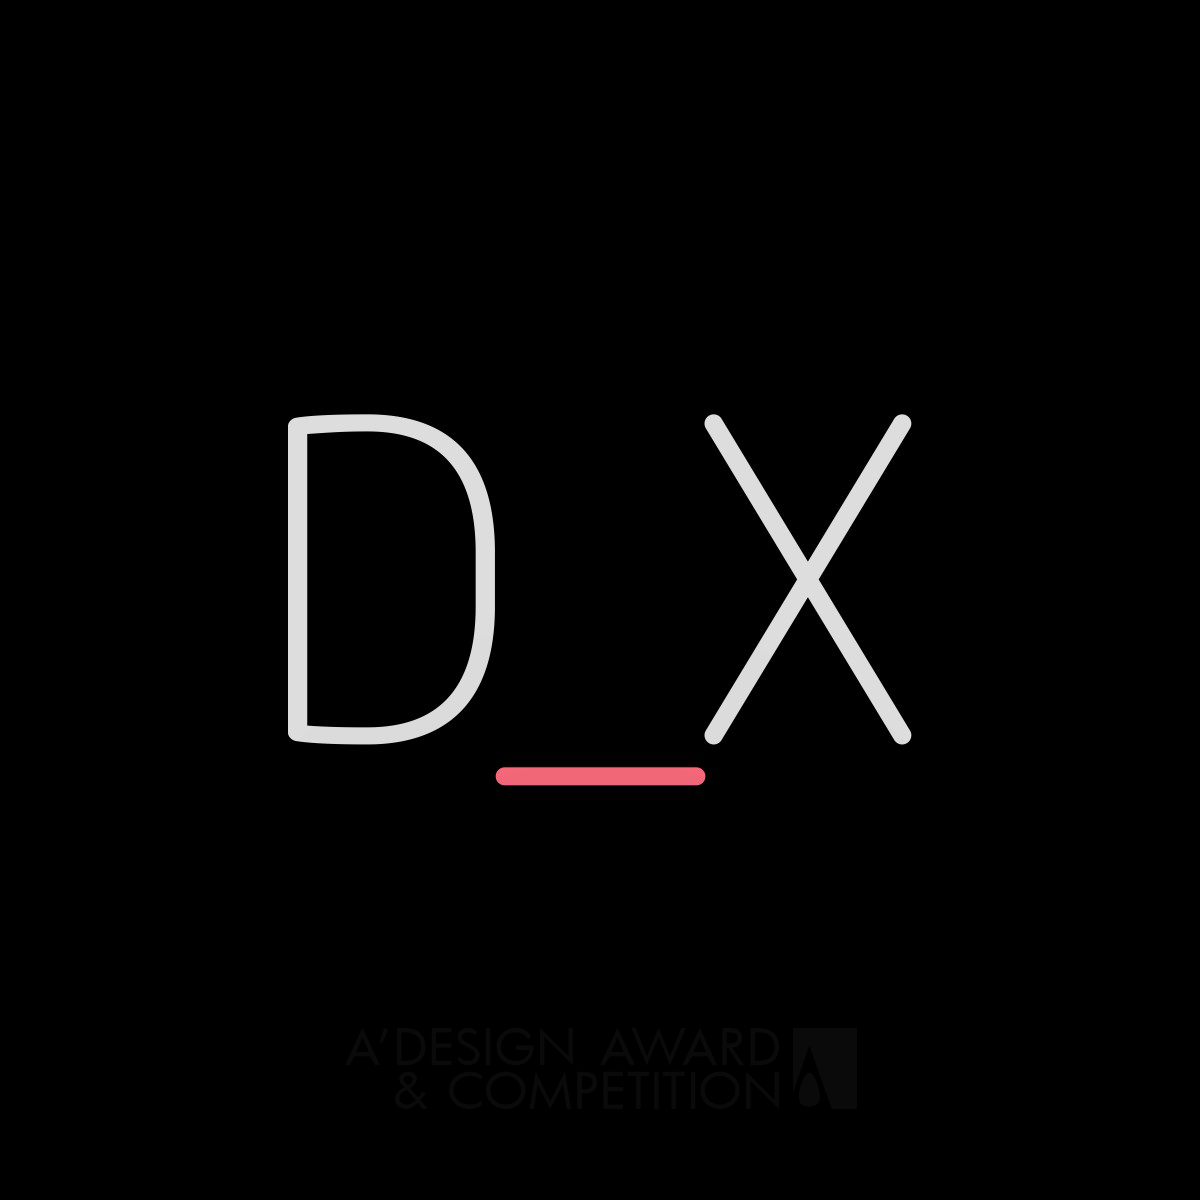 D_X Corporate Identity by José Jiménez Valladares